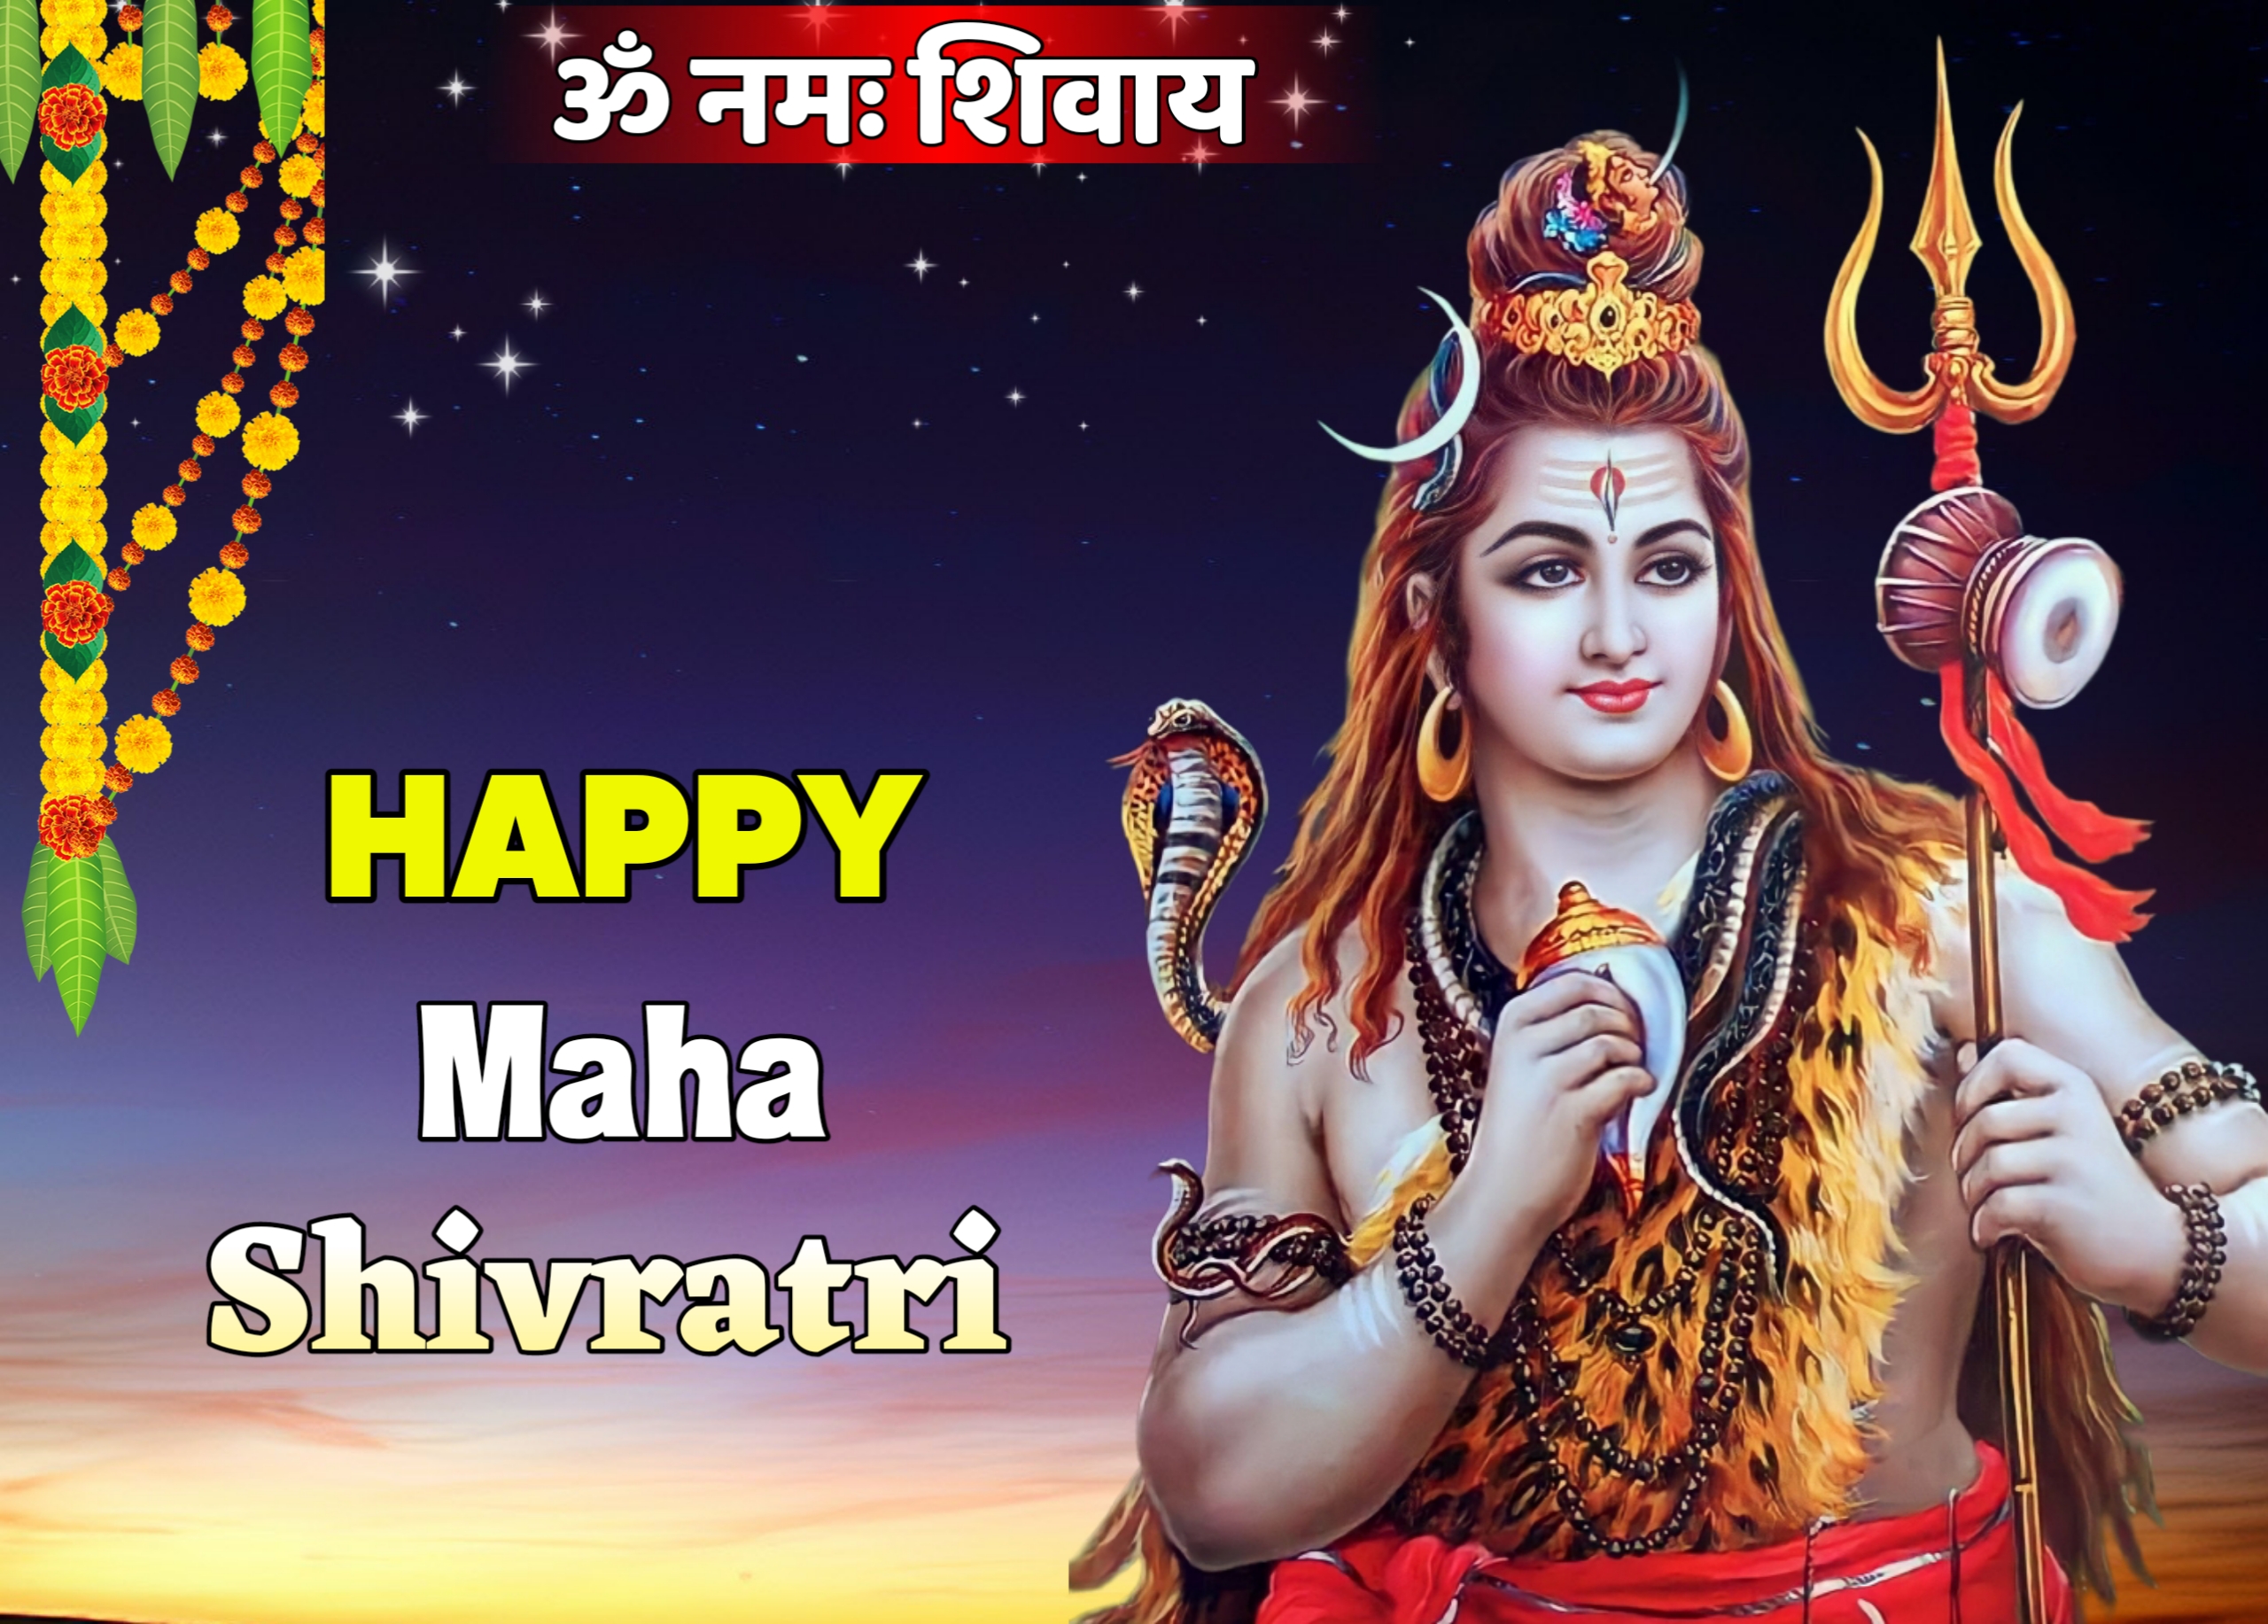 Maha Shivratri Wallpaper Image HD Download Free 